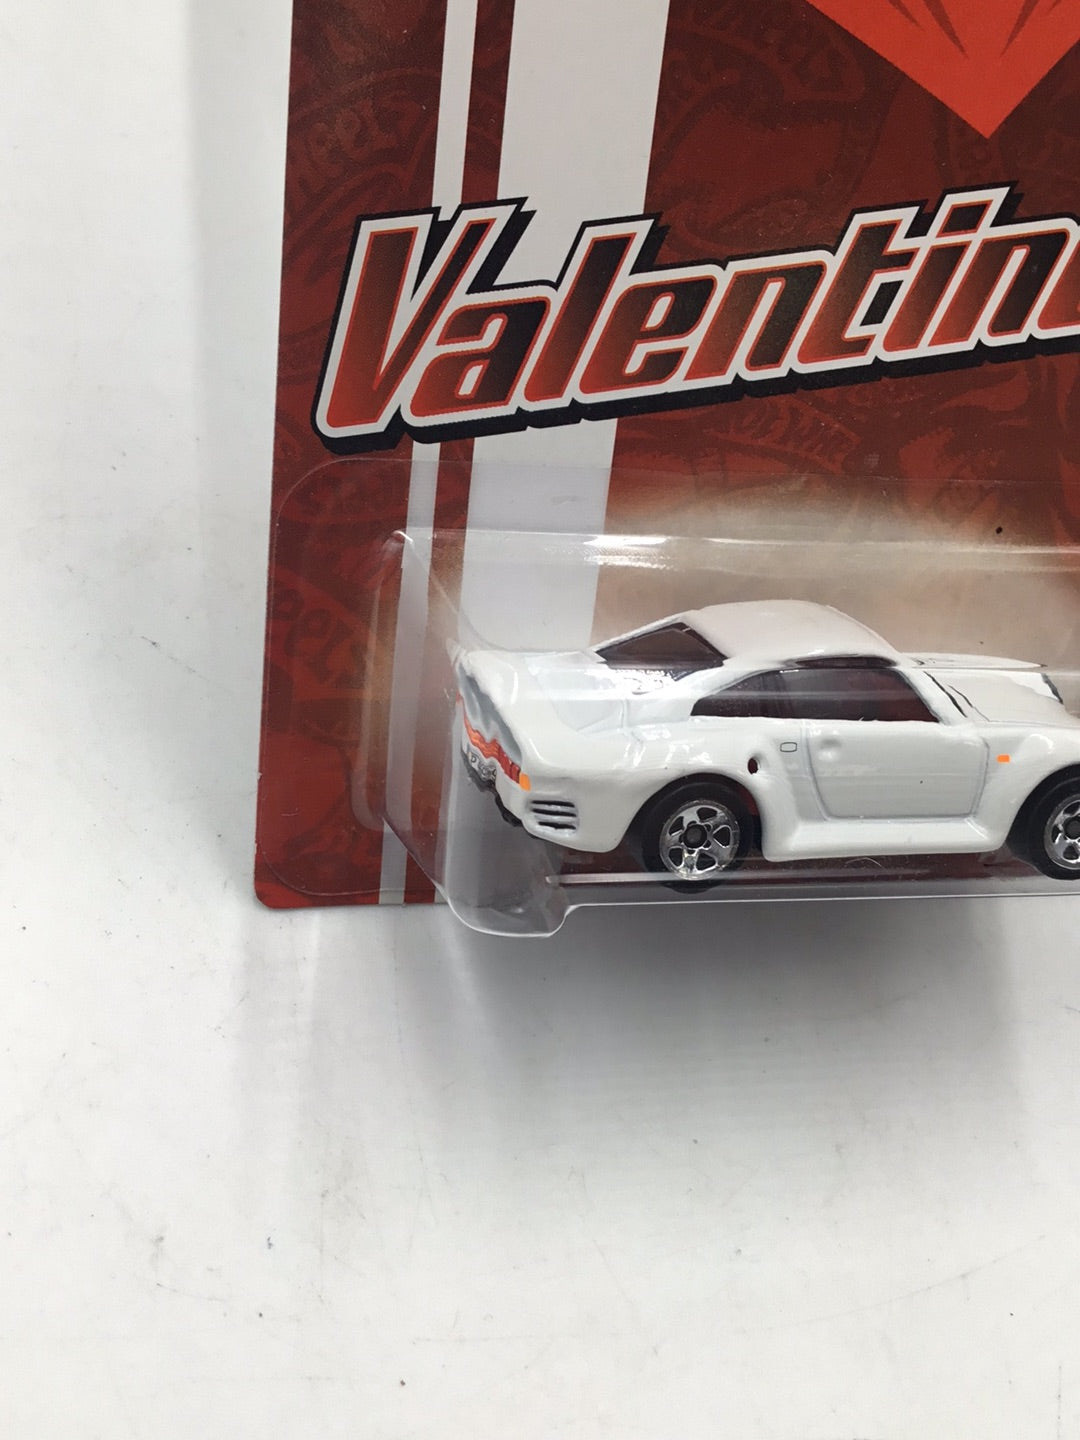 Hot Wheels Valentines Porsche 959 Walmart Exclusive with protector